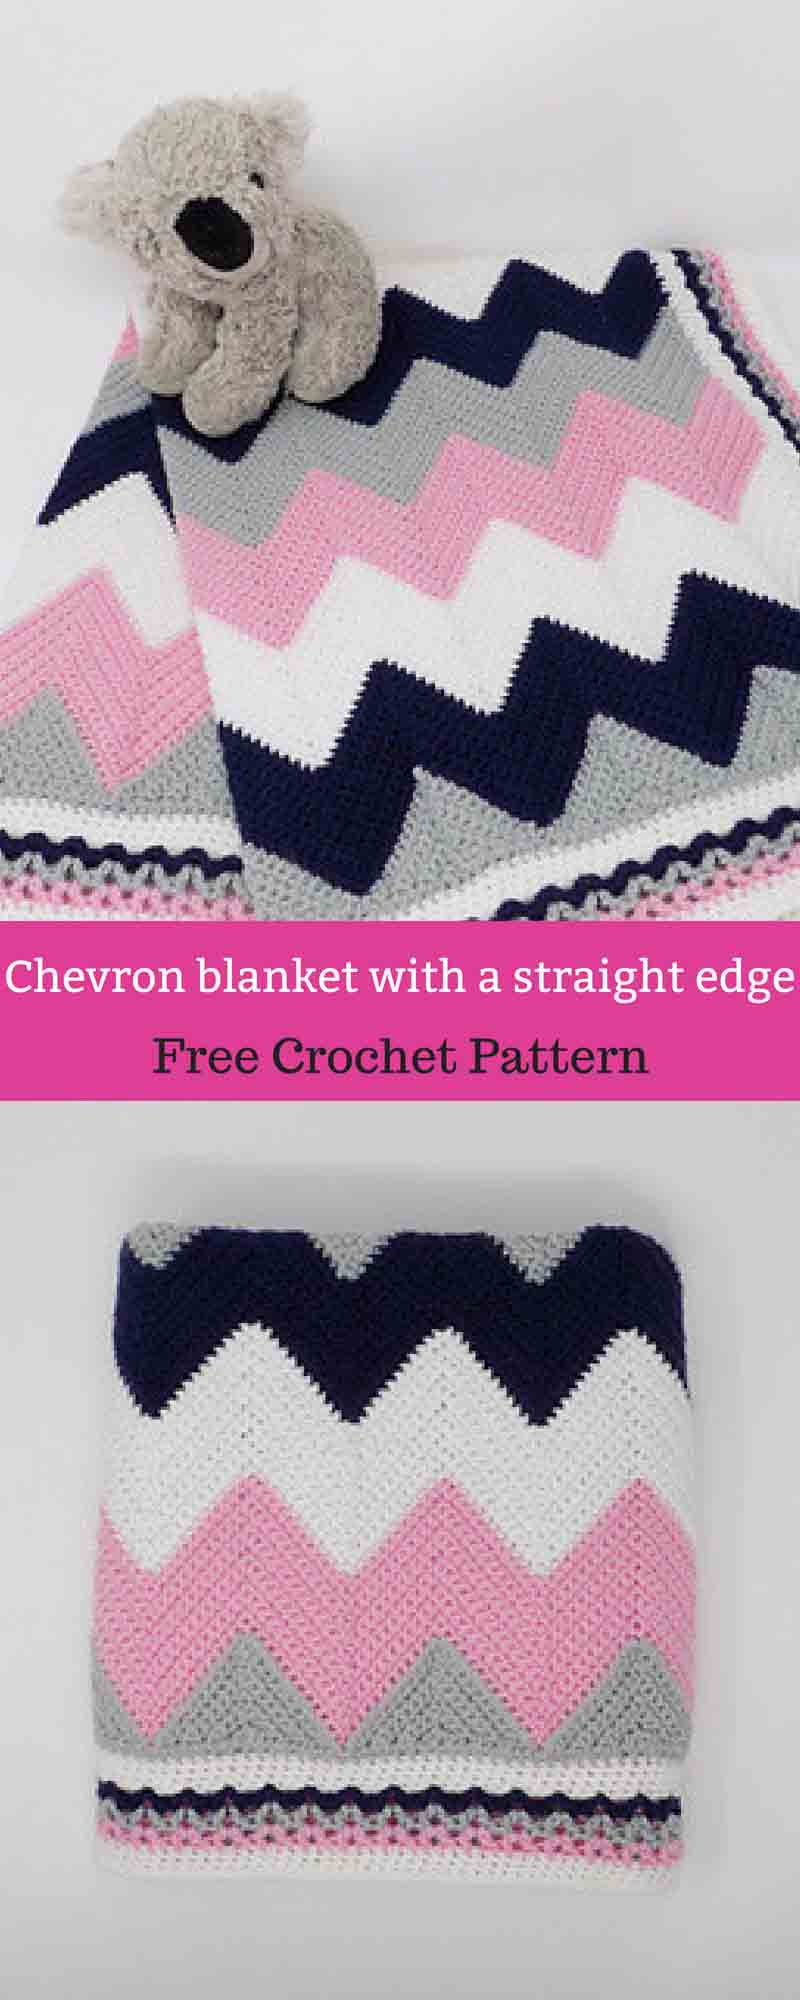 Chevron Crochet Pattern Free Chevron Blanket With A Straight Edge Free Crochet Pattern All